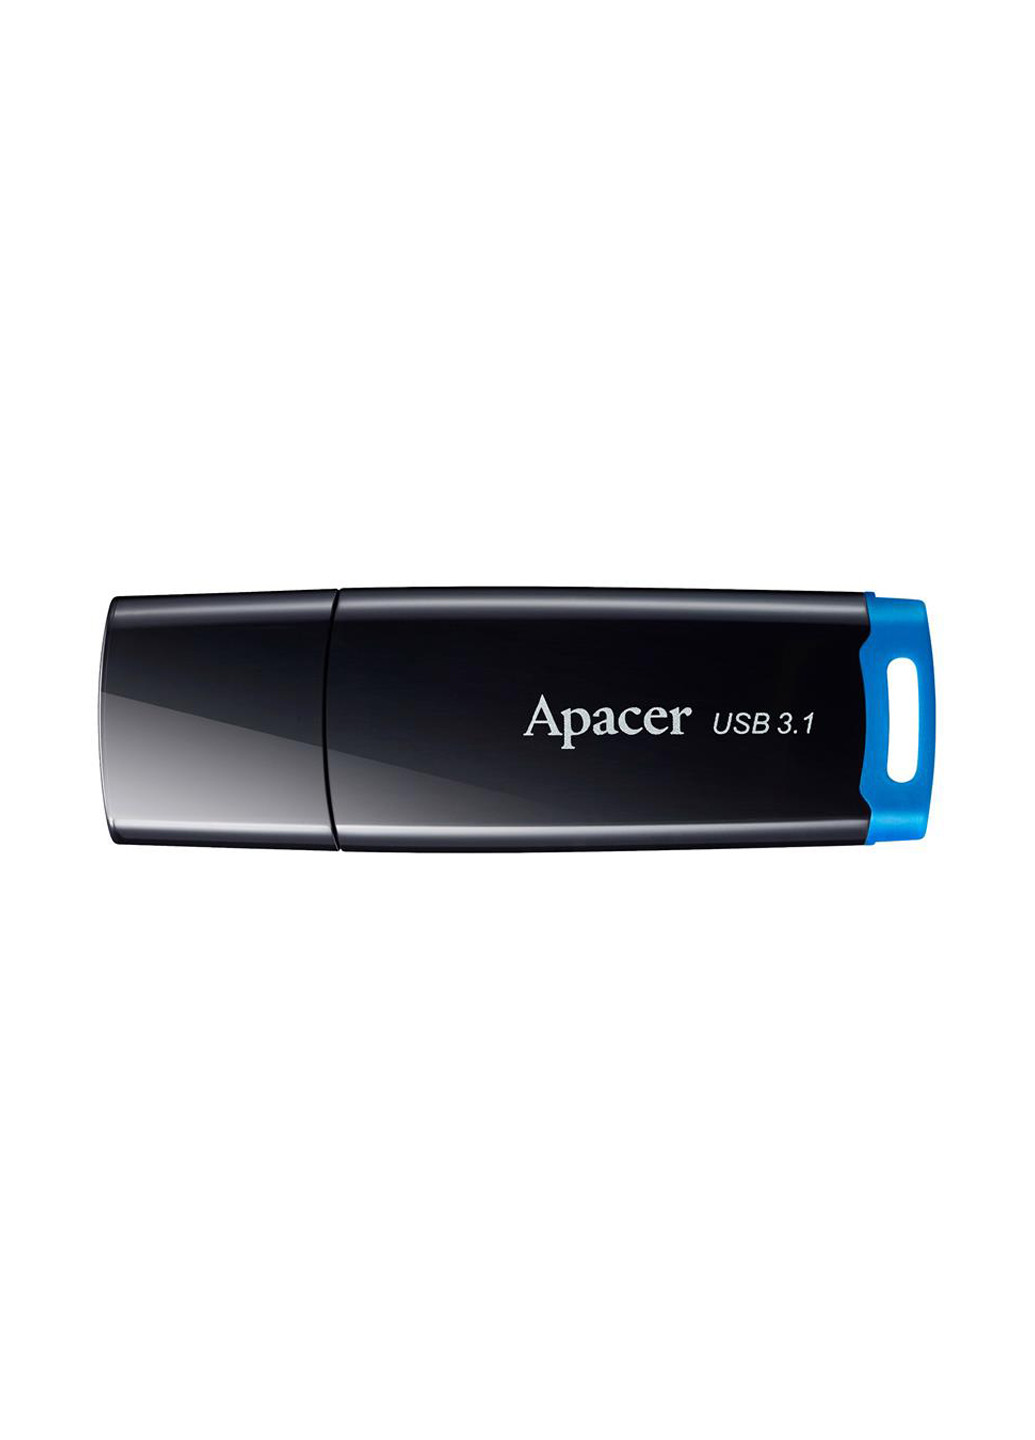 Флеш память USB AH359 64GB USB 3.1 Black (AP64GAH359U-1) Apacer флеш память usb apacer ah359 64gb usb 3.1 black (ap64gah359u-1) (135165432)